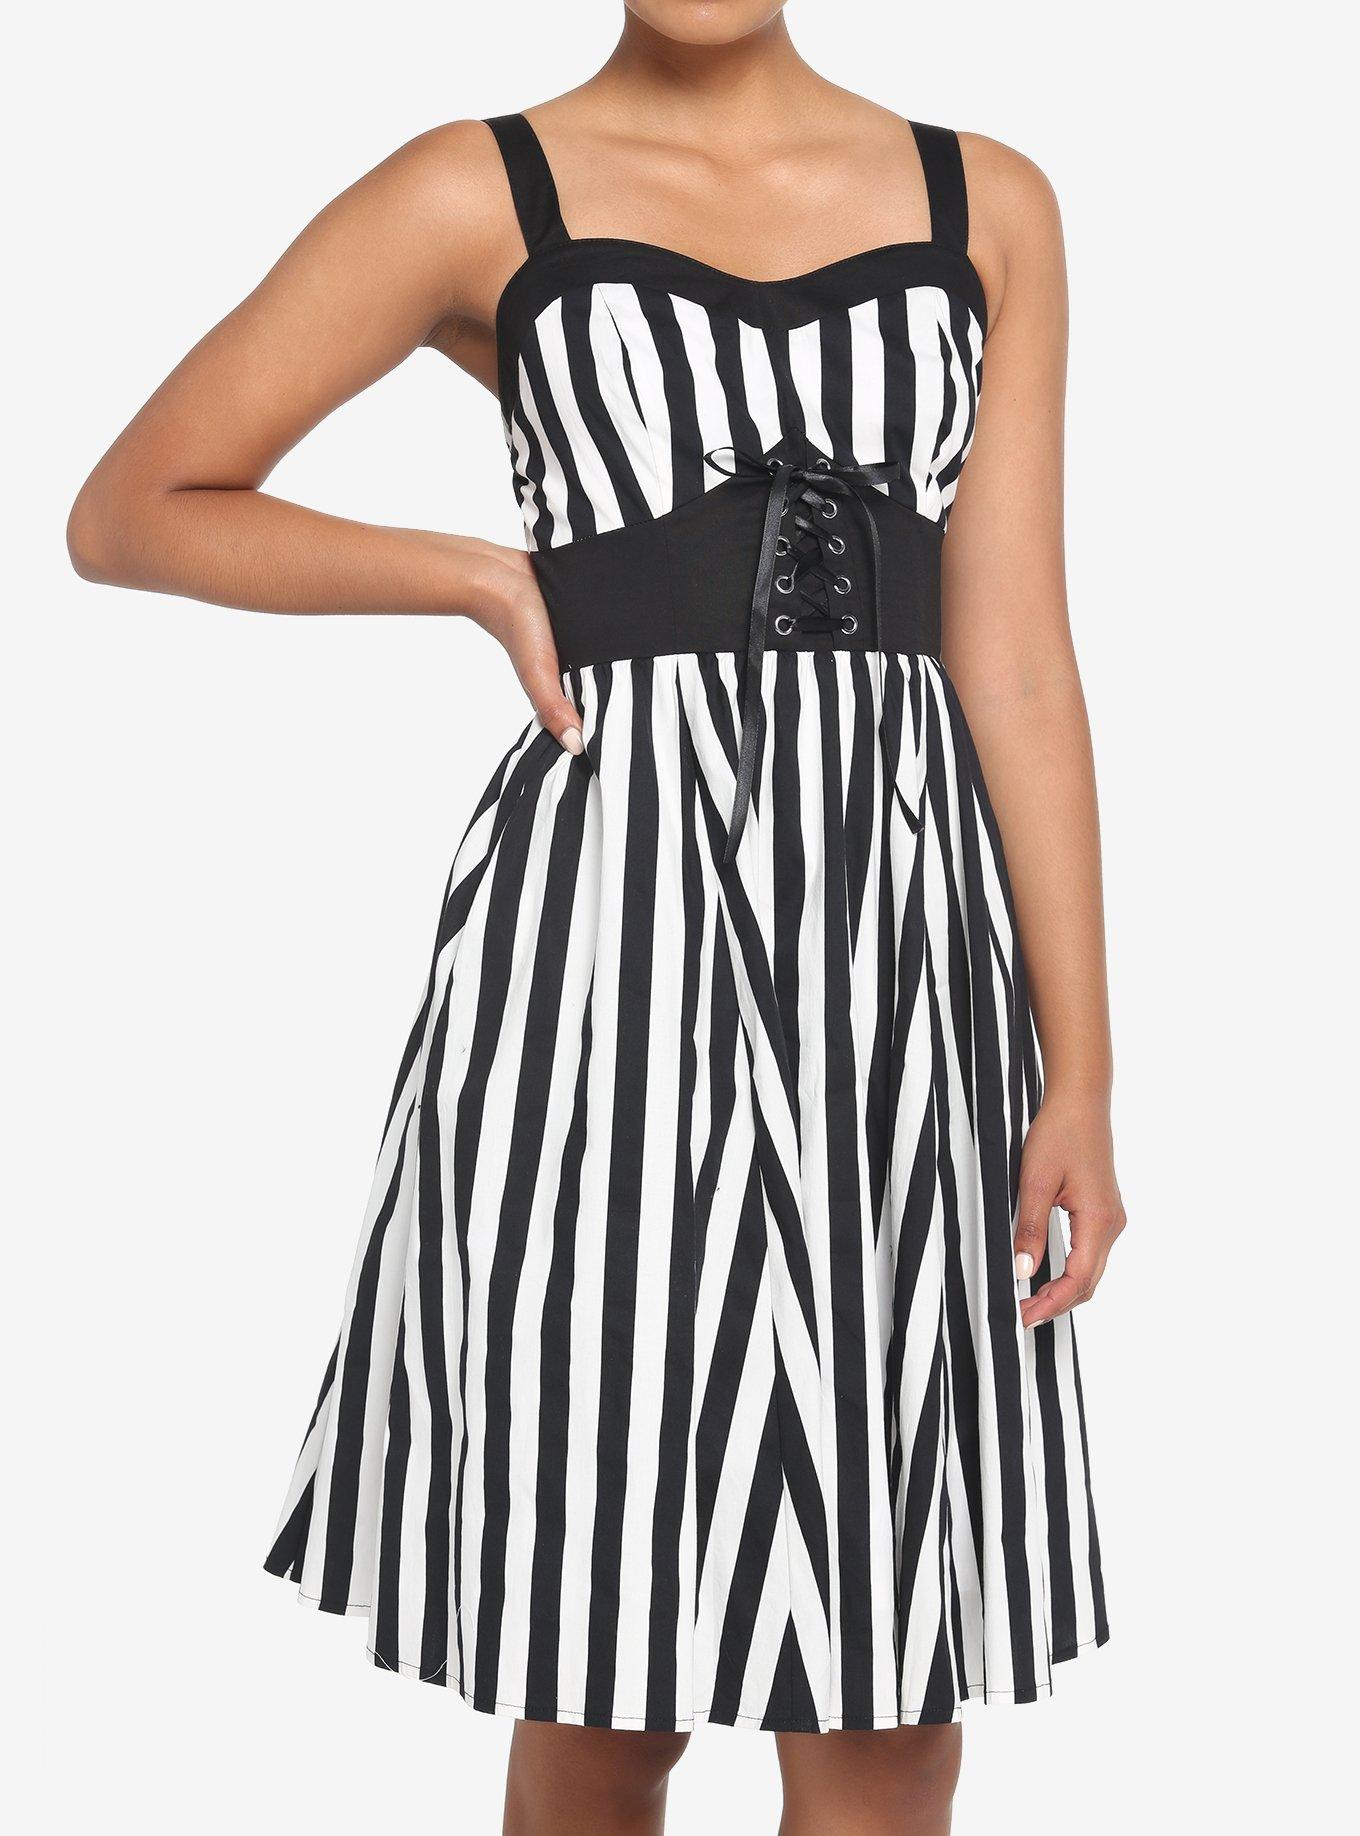 Dapper Day Outfit Ideas | Vintage Disney Dresses Black  White Stripe Corset Dress $35.92 AT vintagedancer.com